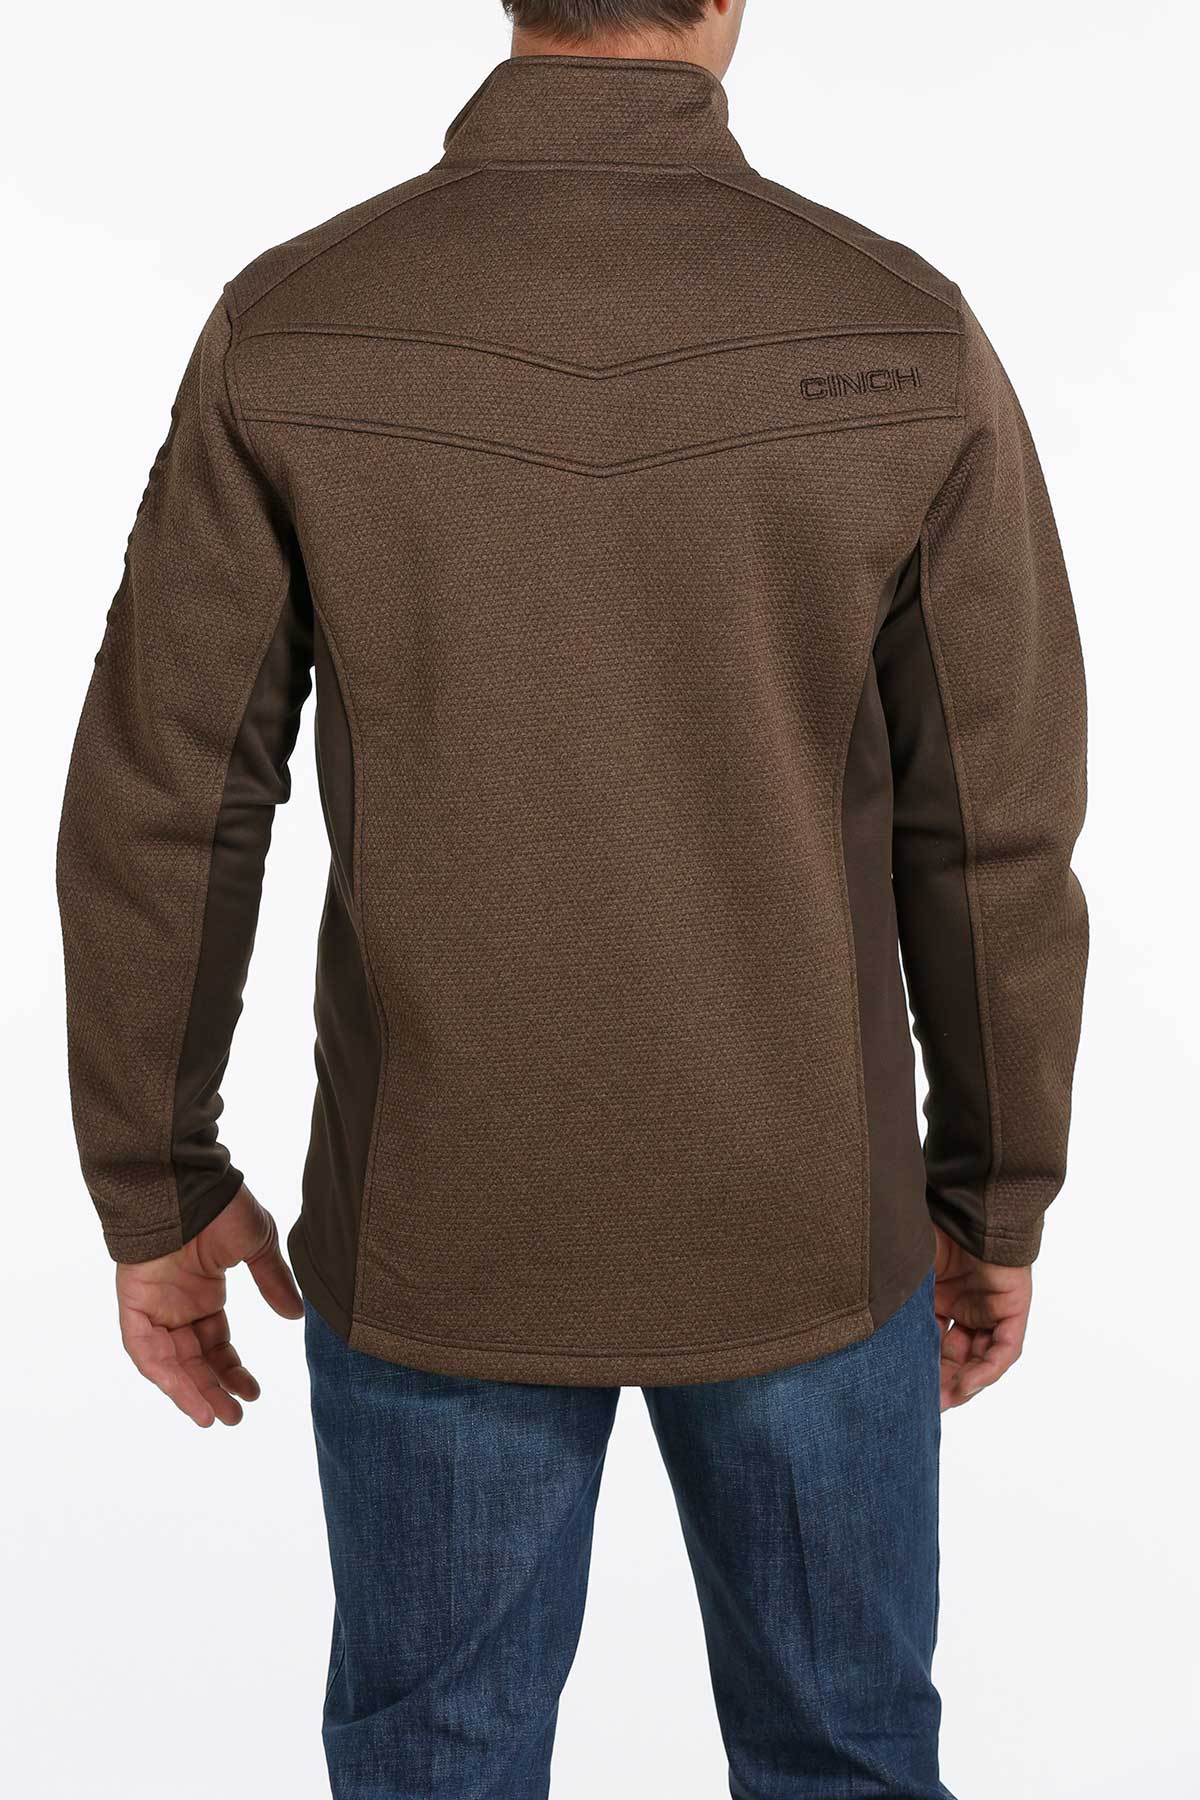 Cinch Brown Sweater Jacket